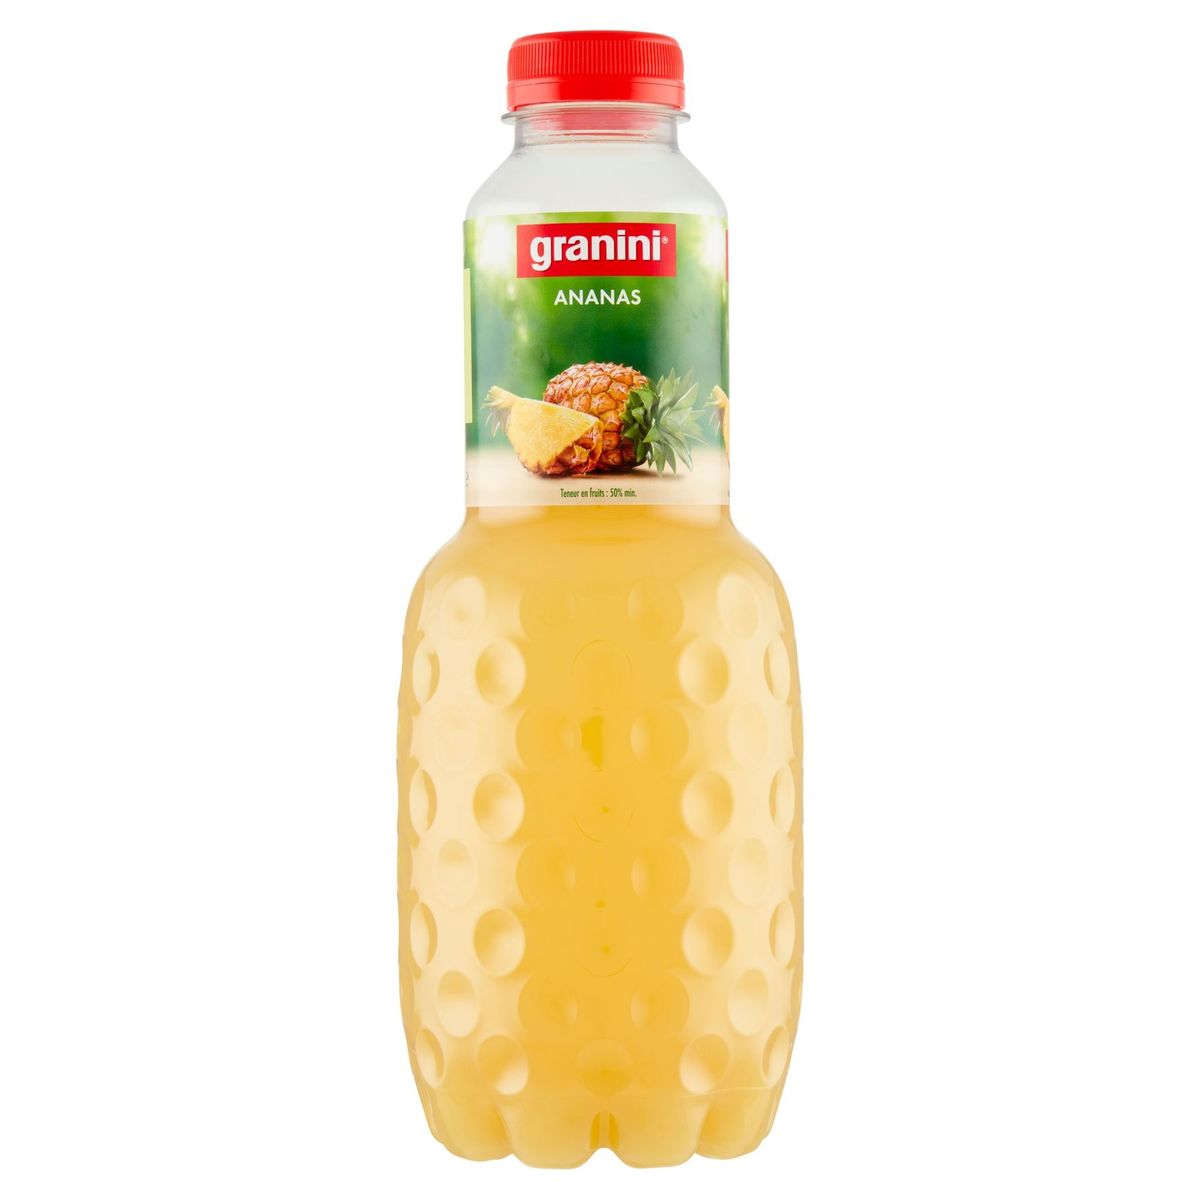 granini Ananas 1 L